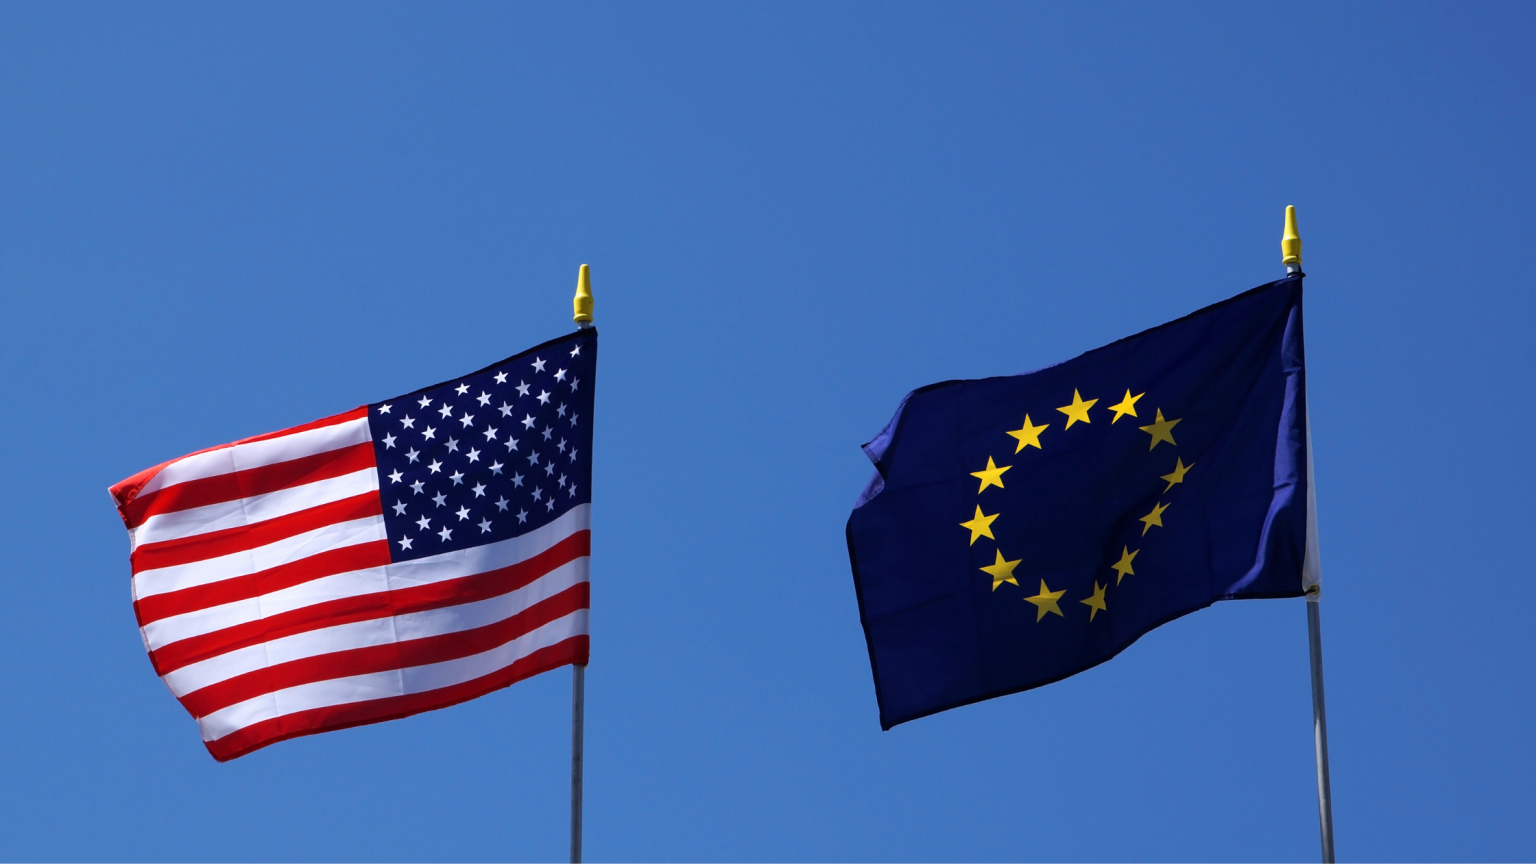 Eu u. Украина ЕС США флаги. Флаги ЕС И США. США ЕС РФ флаг. Европейский Союз и США.